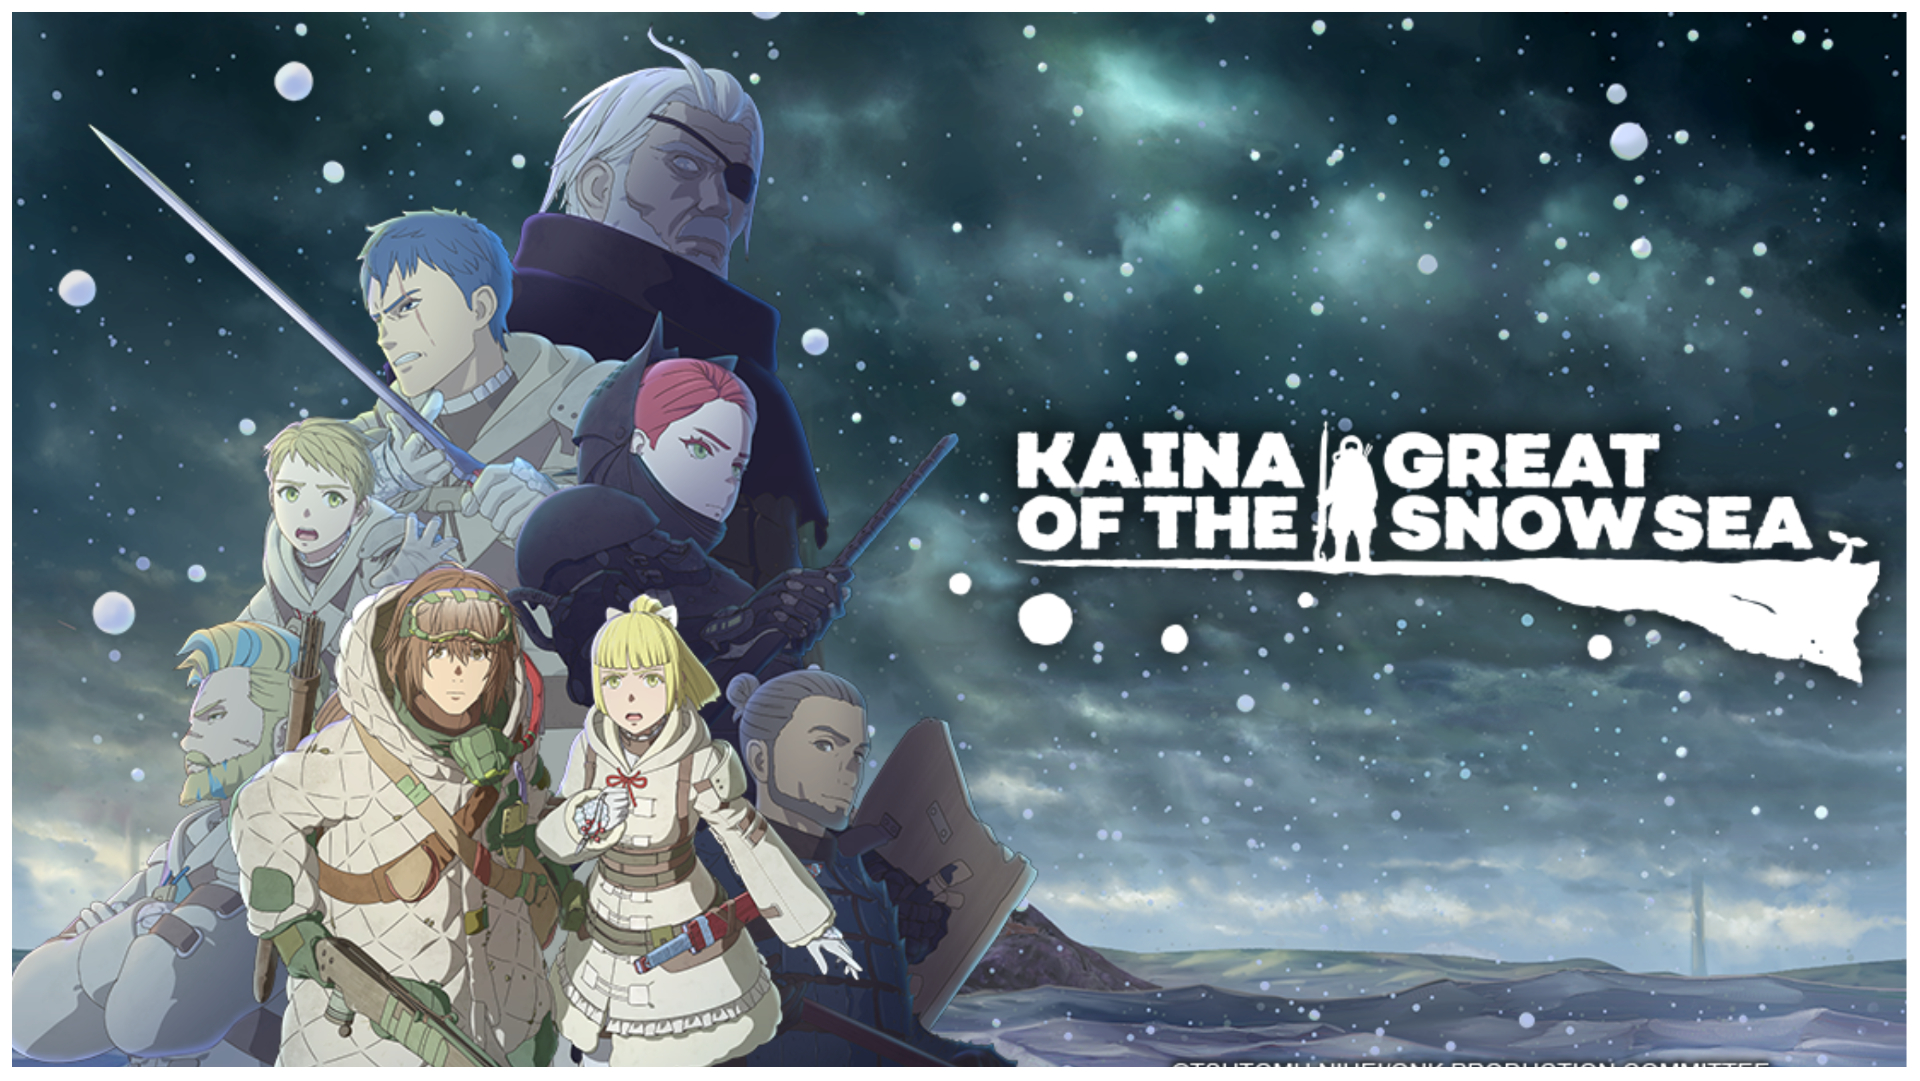 Arte clave para la serie de anime Kaina of the Great Snow Sea.